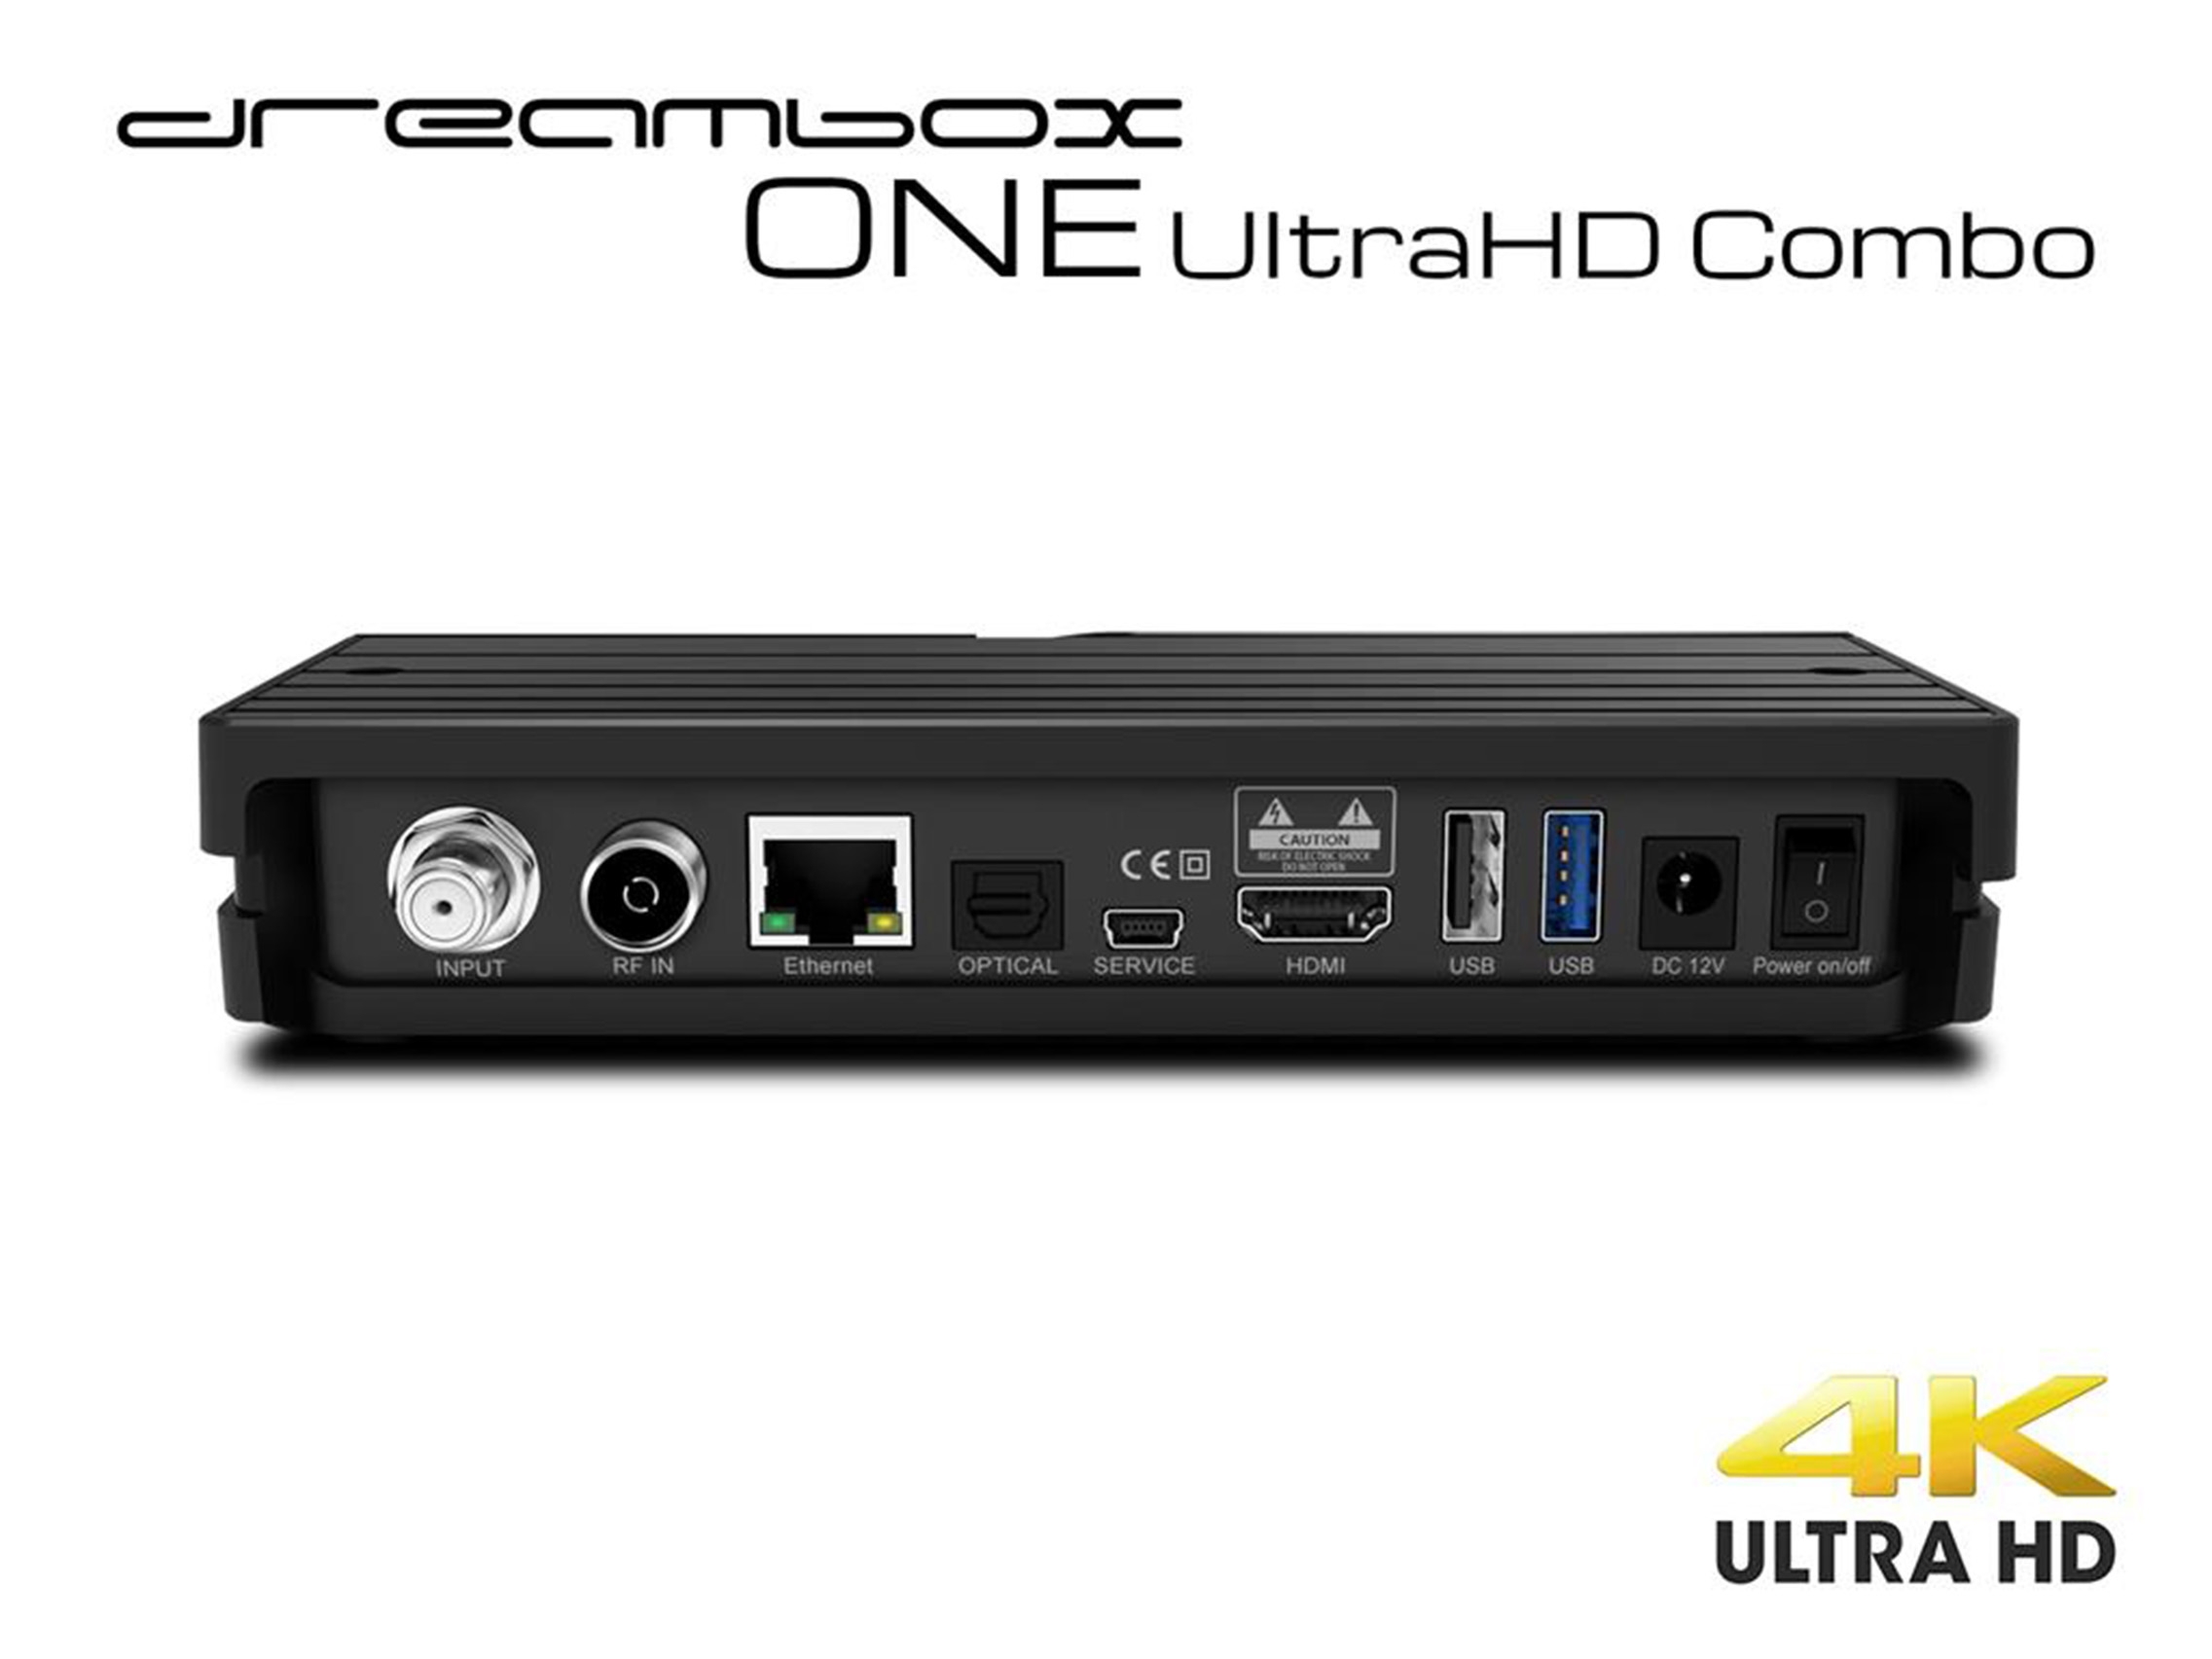 Dreambox One Combo Ultra HD 1x DVB-S2X MIS 1xDVB-C/T2 Tuner 4K